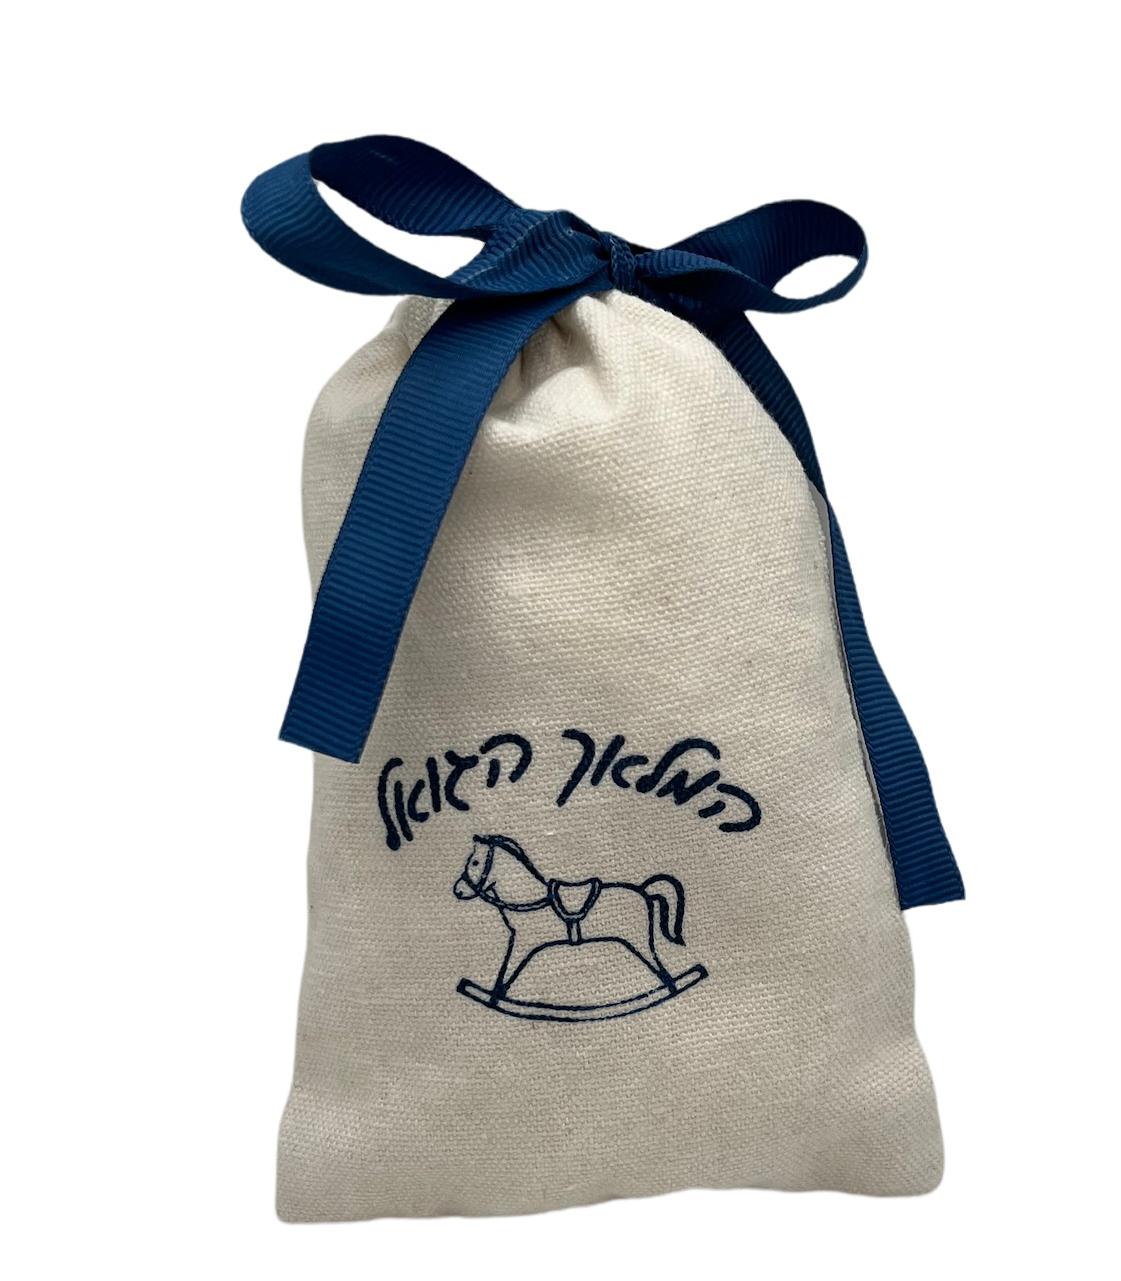 Rocking Horse Design Cotton Vachnacht Bags 4x6